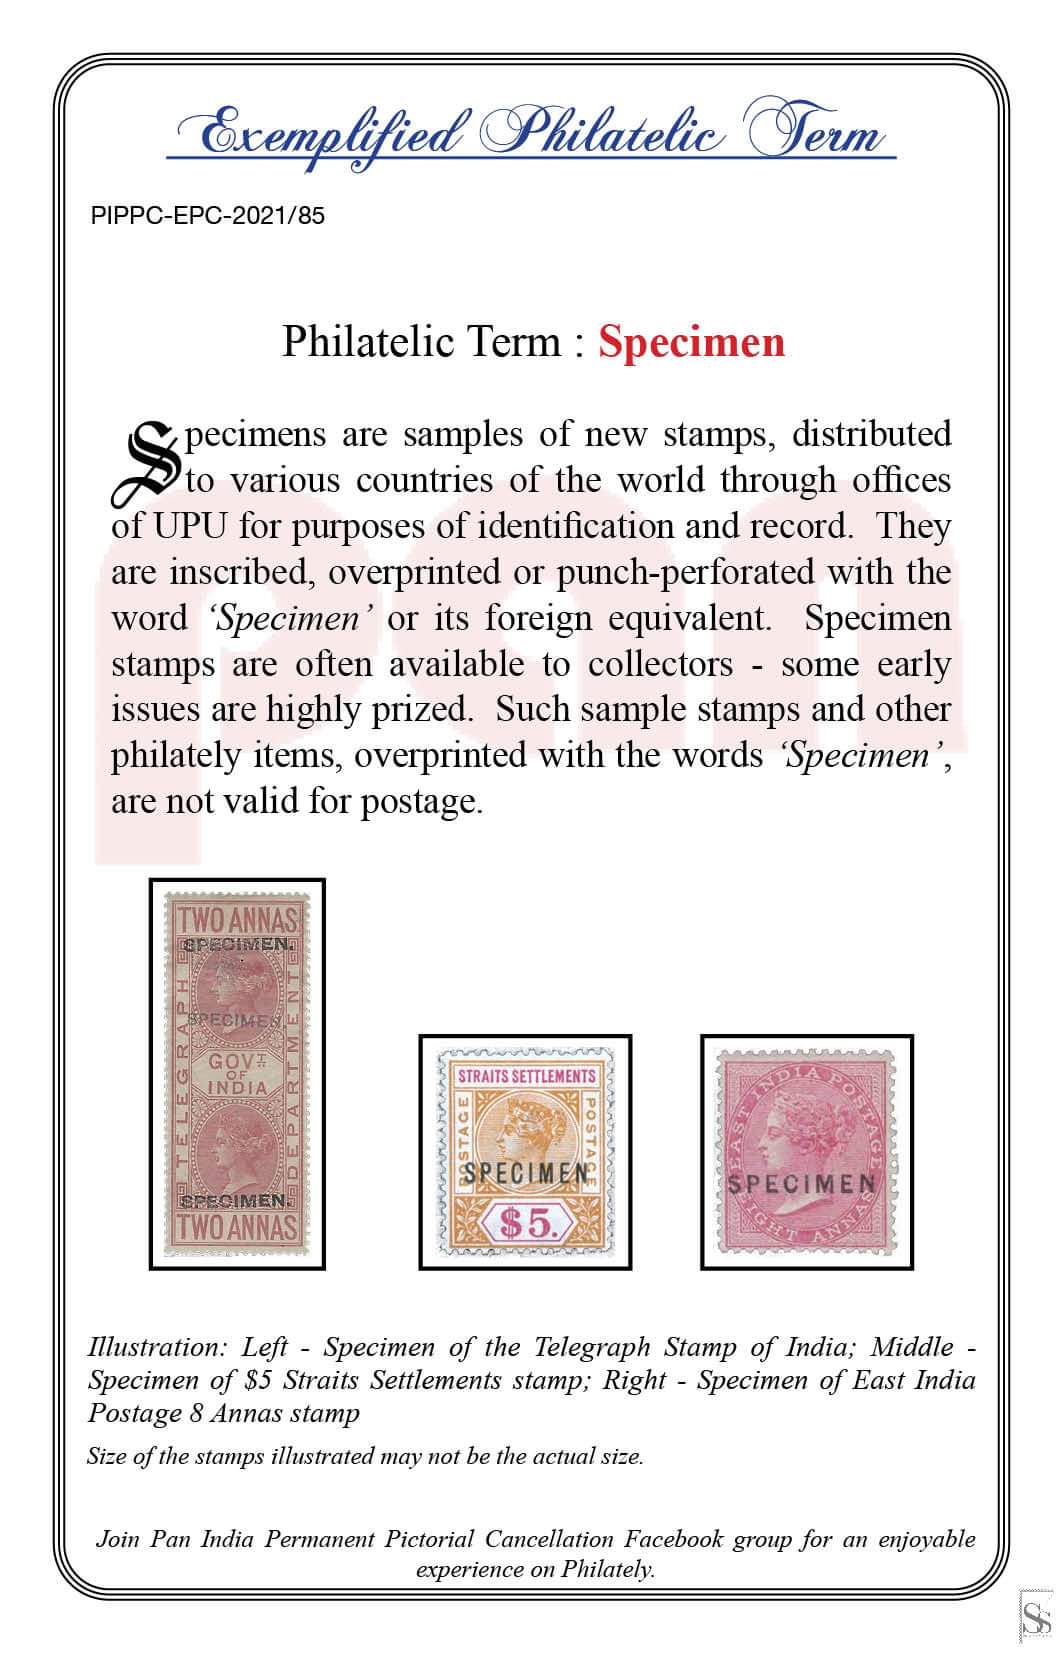 85. Today's Exemplified Philatelic term- Specimen